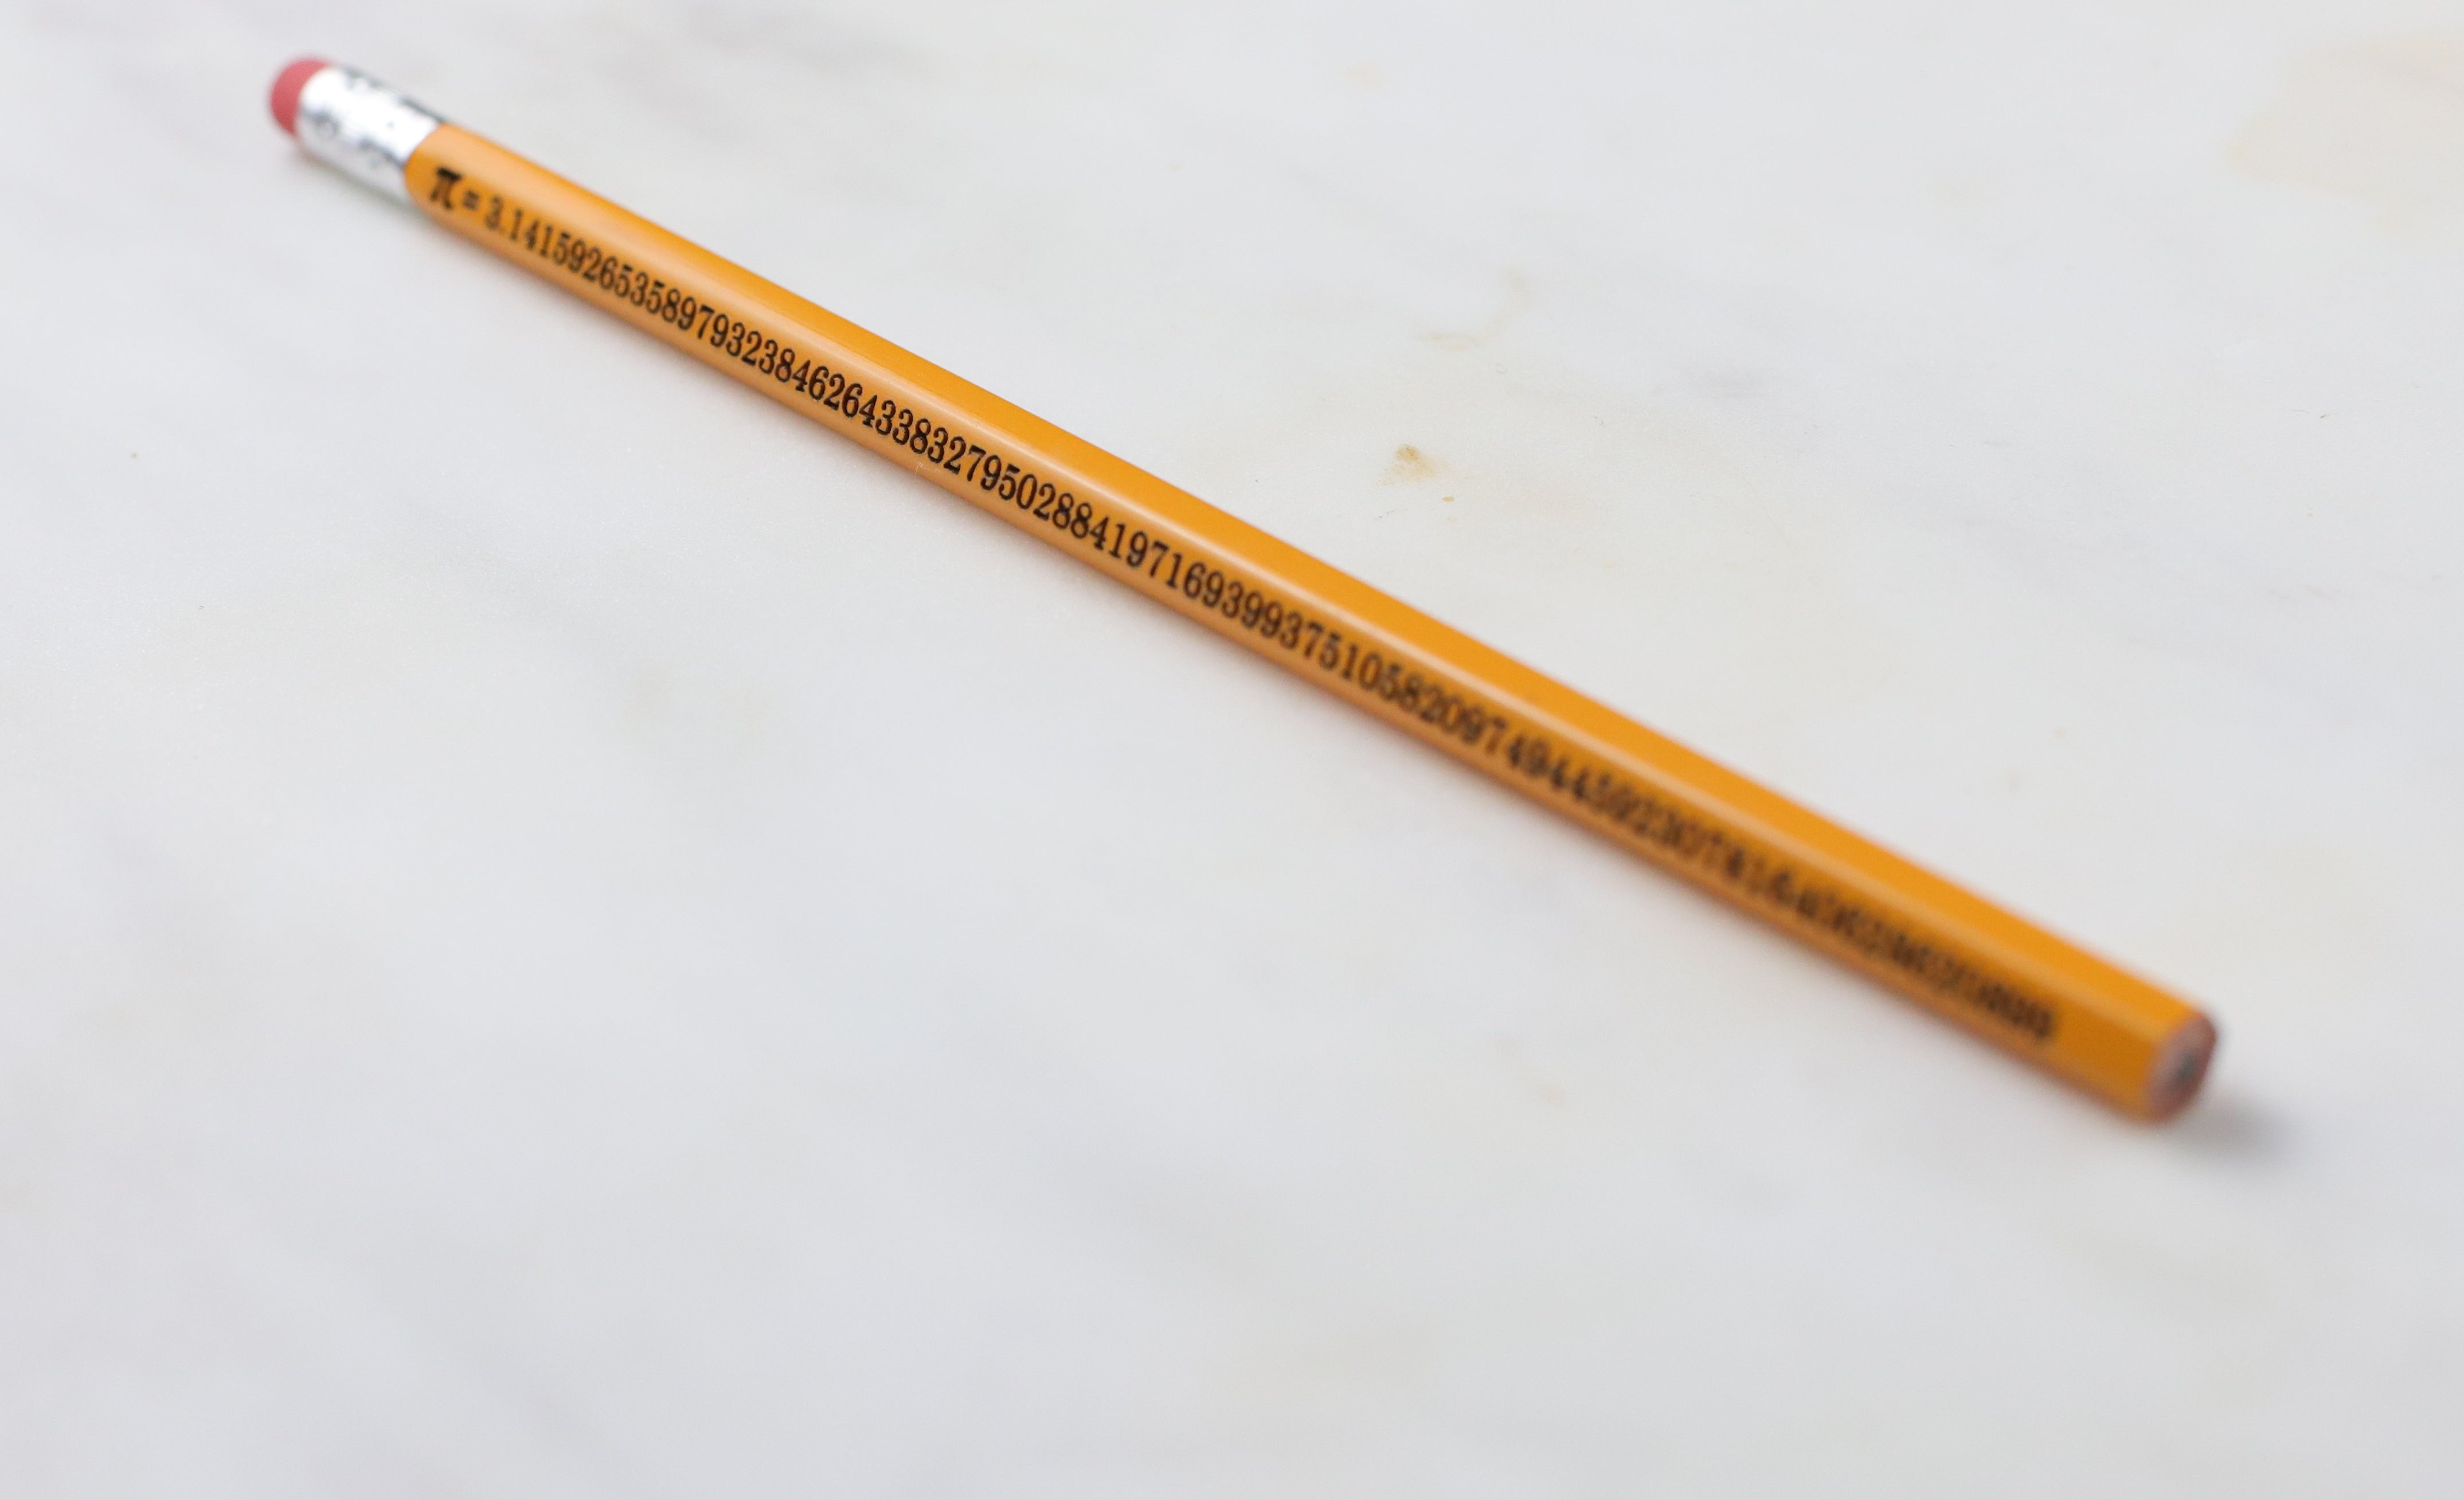 Engraved π pencil